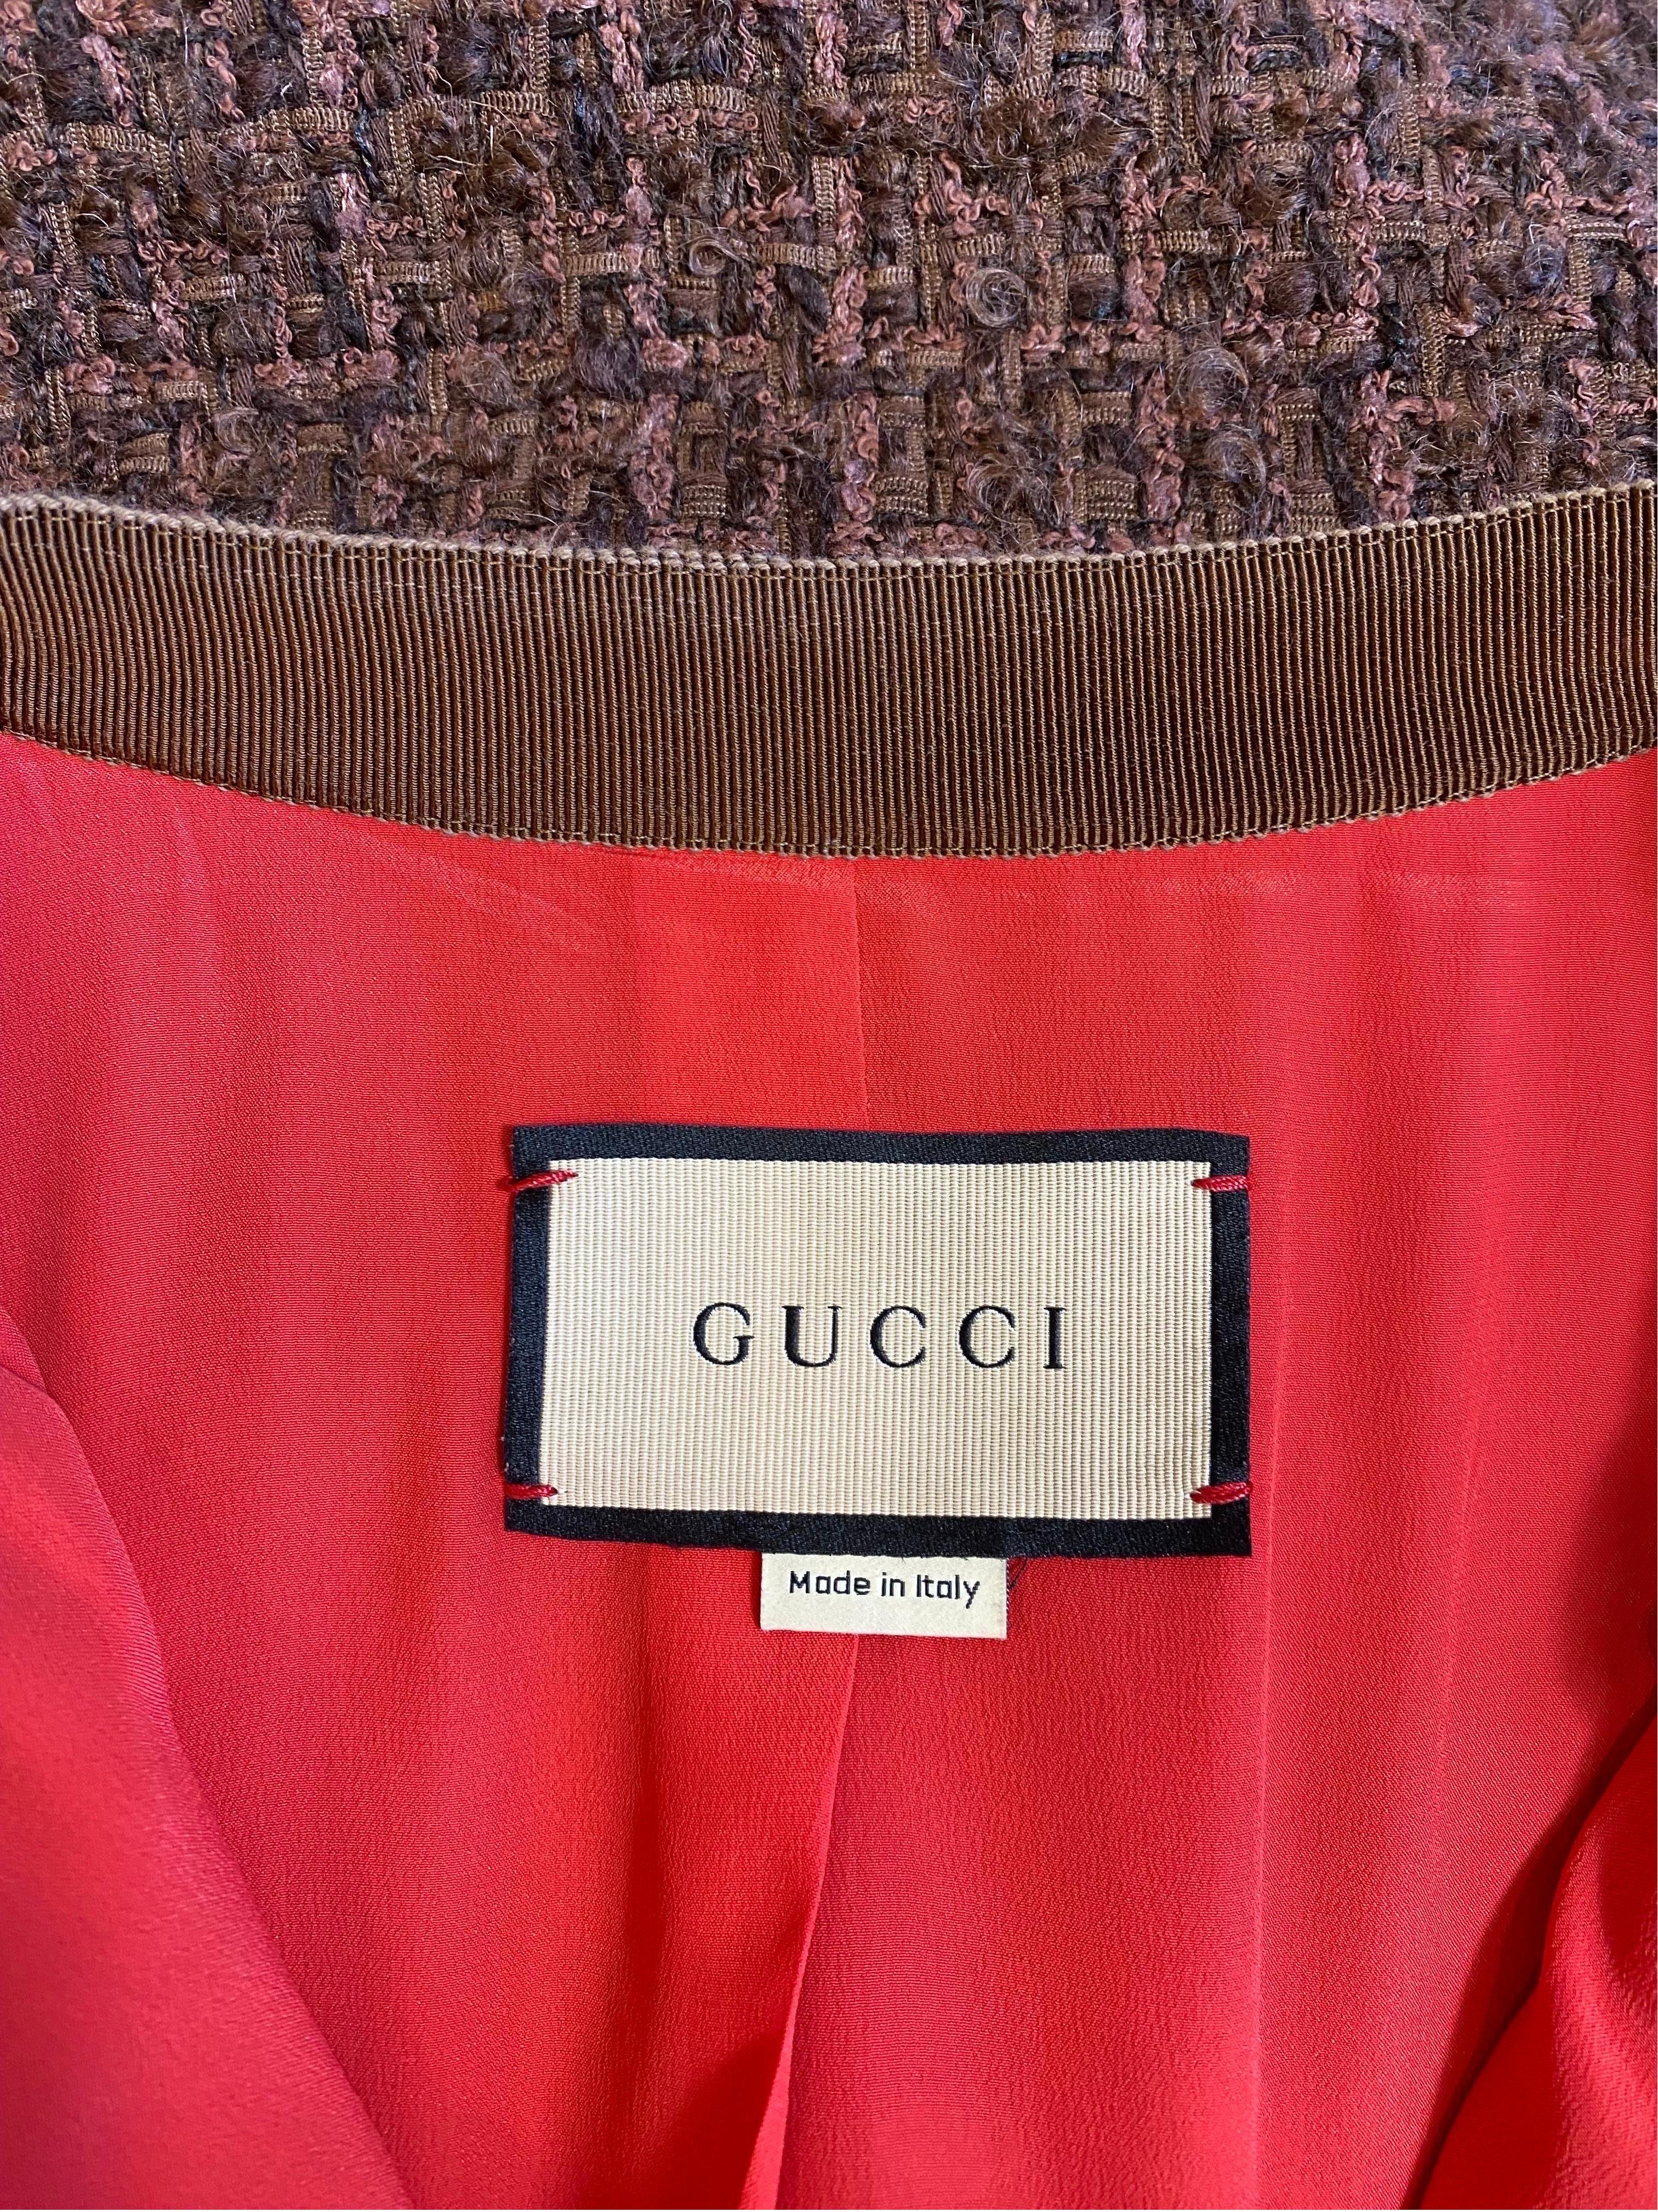 Gucci tweed wool Jacket For Sale 2